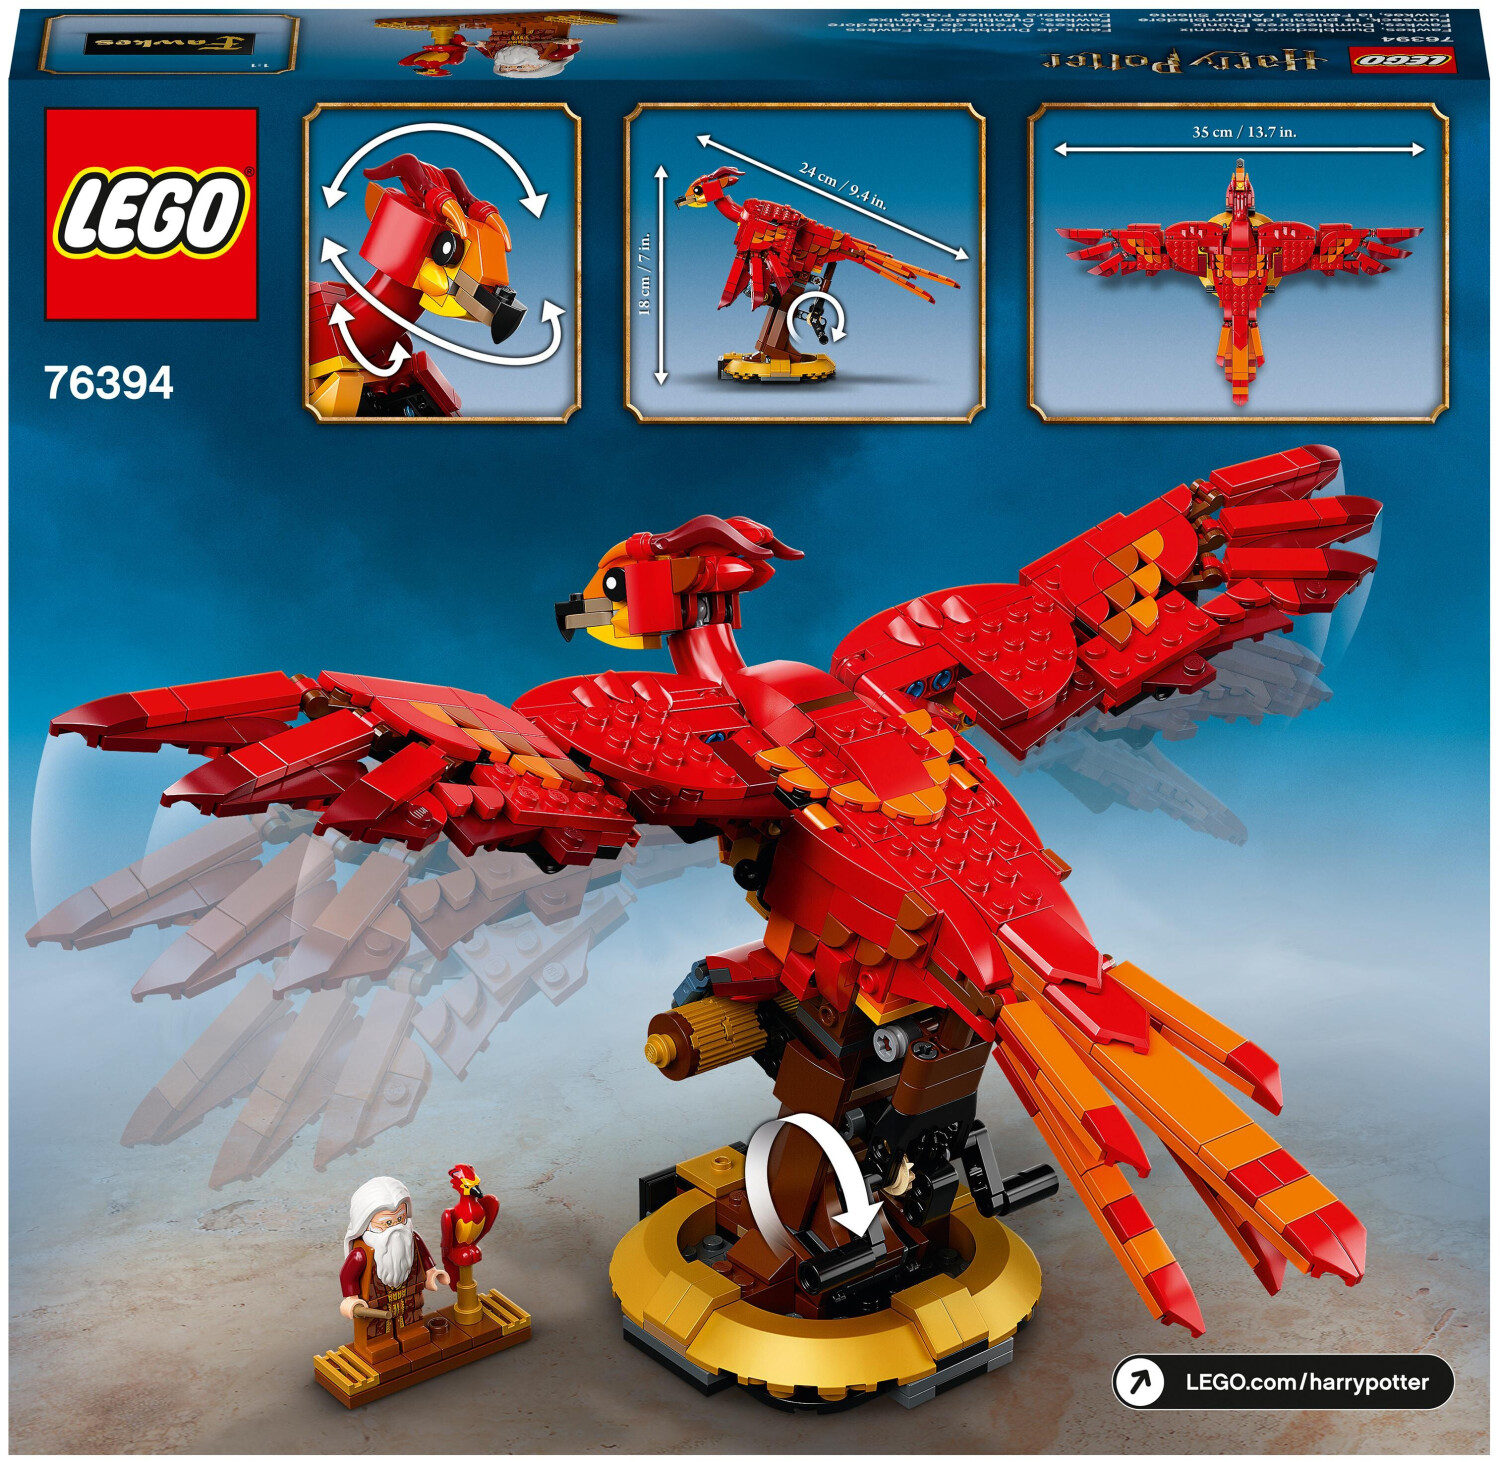 Buy LEGO Harry Potter - Fawkes, Dumbledoreâs Phoenix (76394) from Â£34.99 (Today) â Best Deals on 